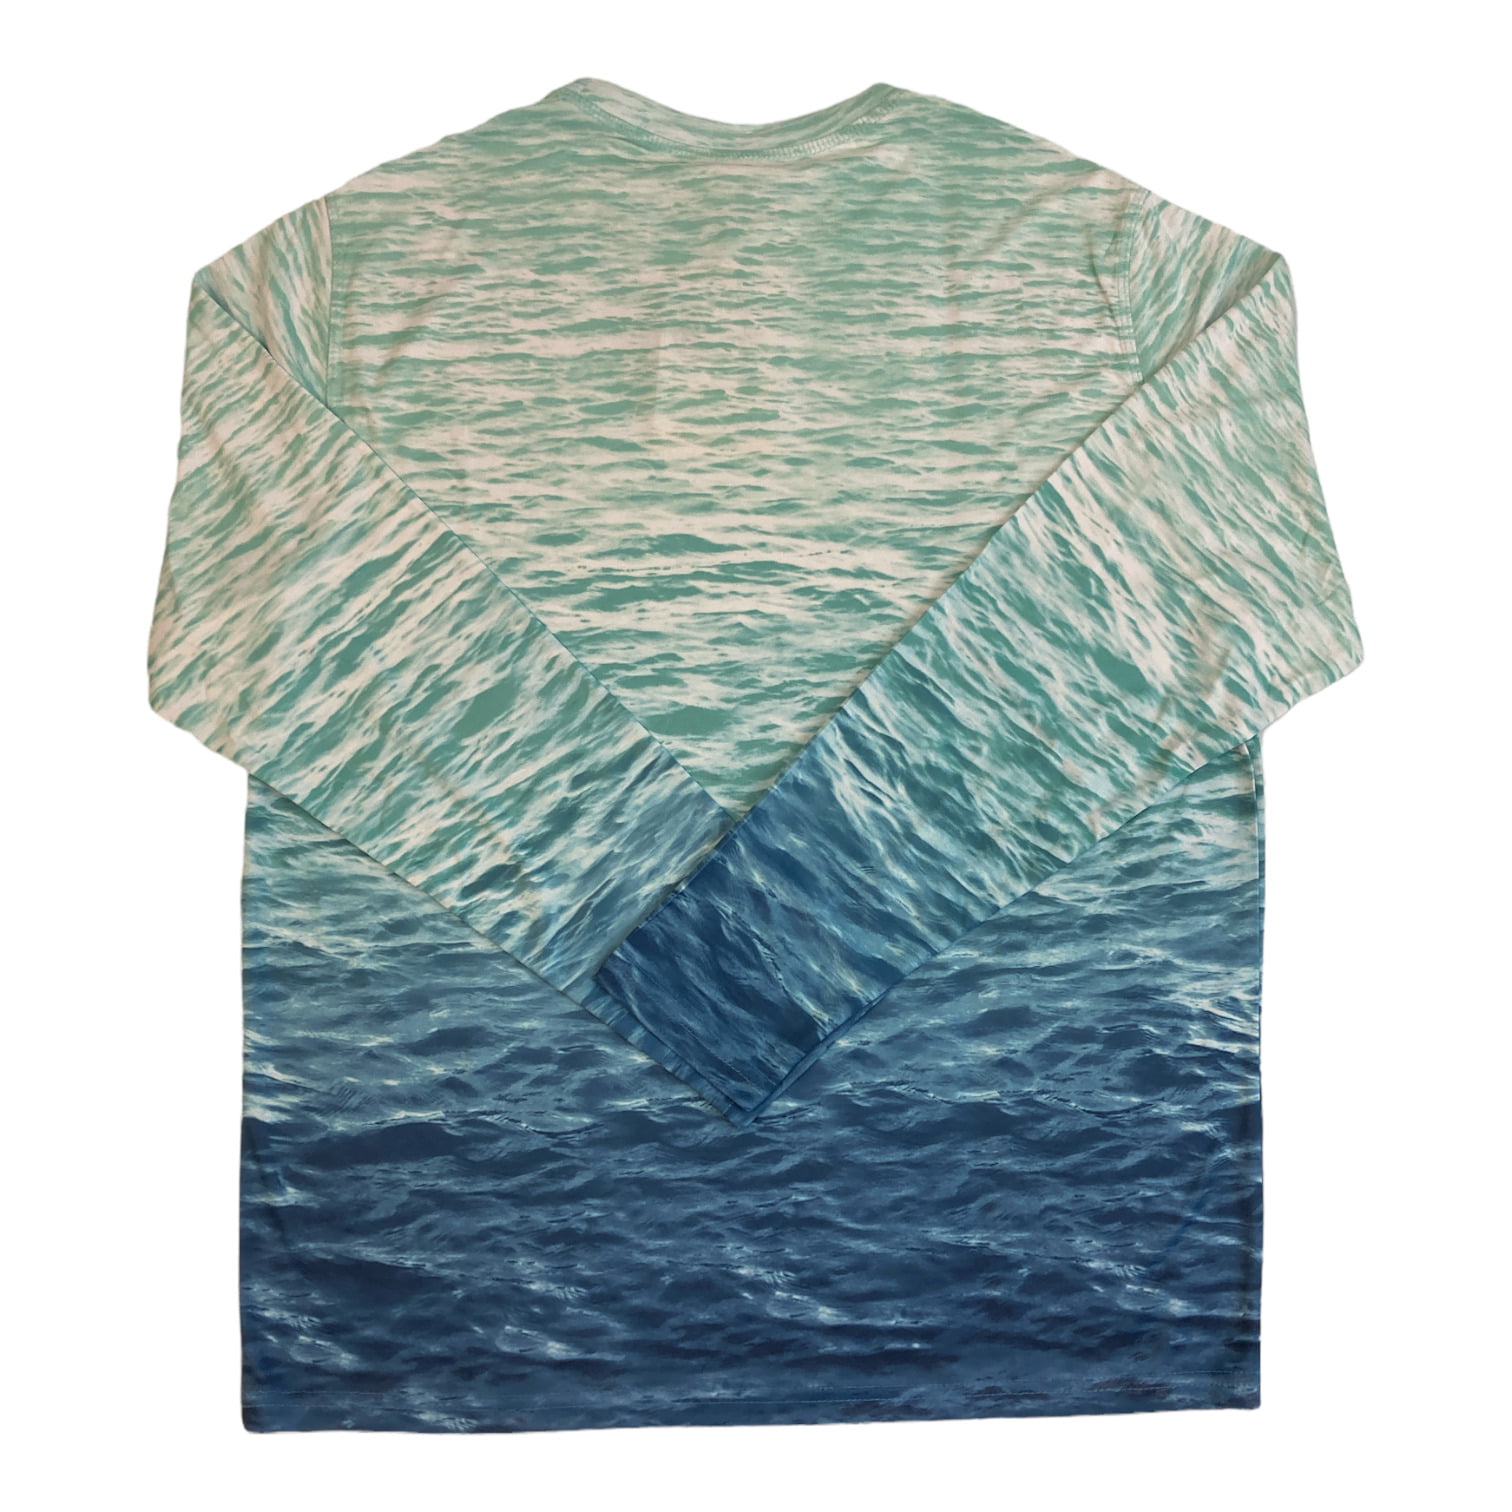 Reel Life Basic Wave UV Long Sleeve Performance T-Shirt - XL - Apricot Wash  